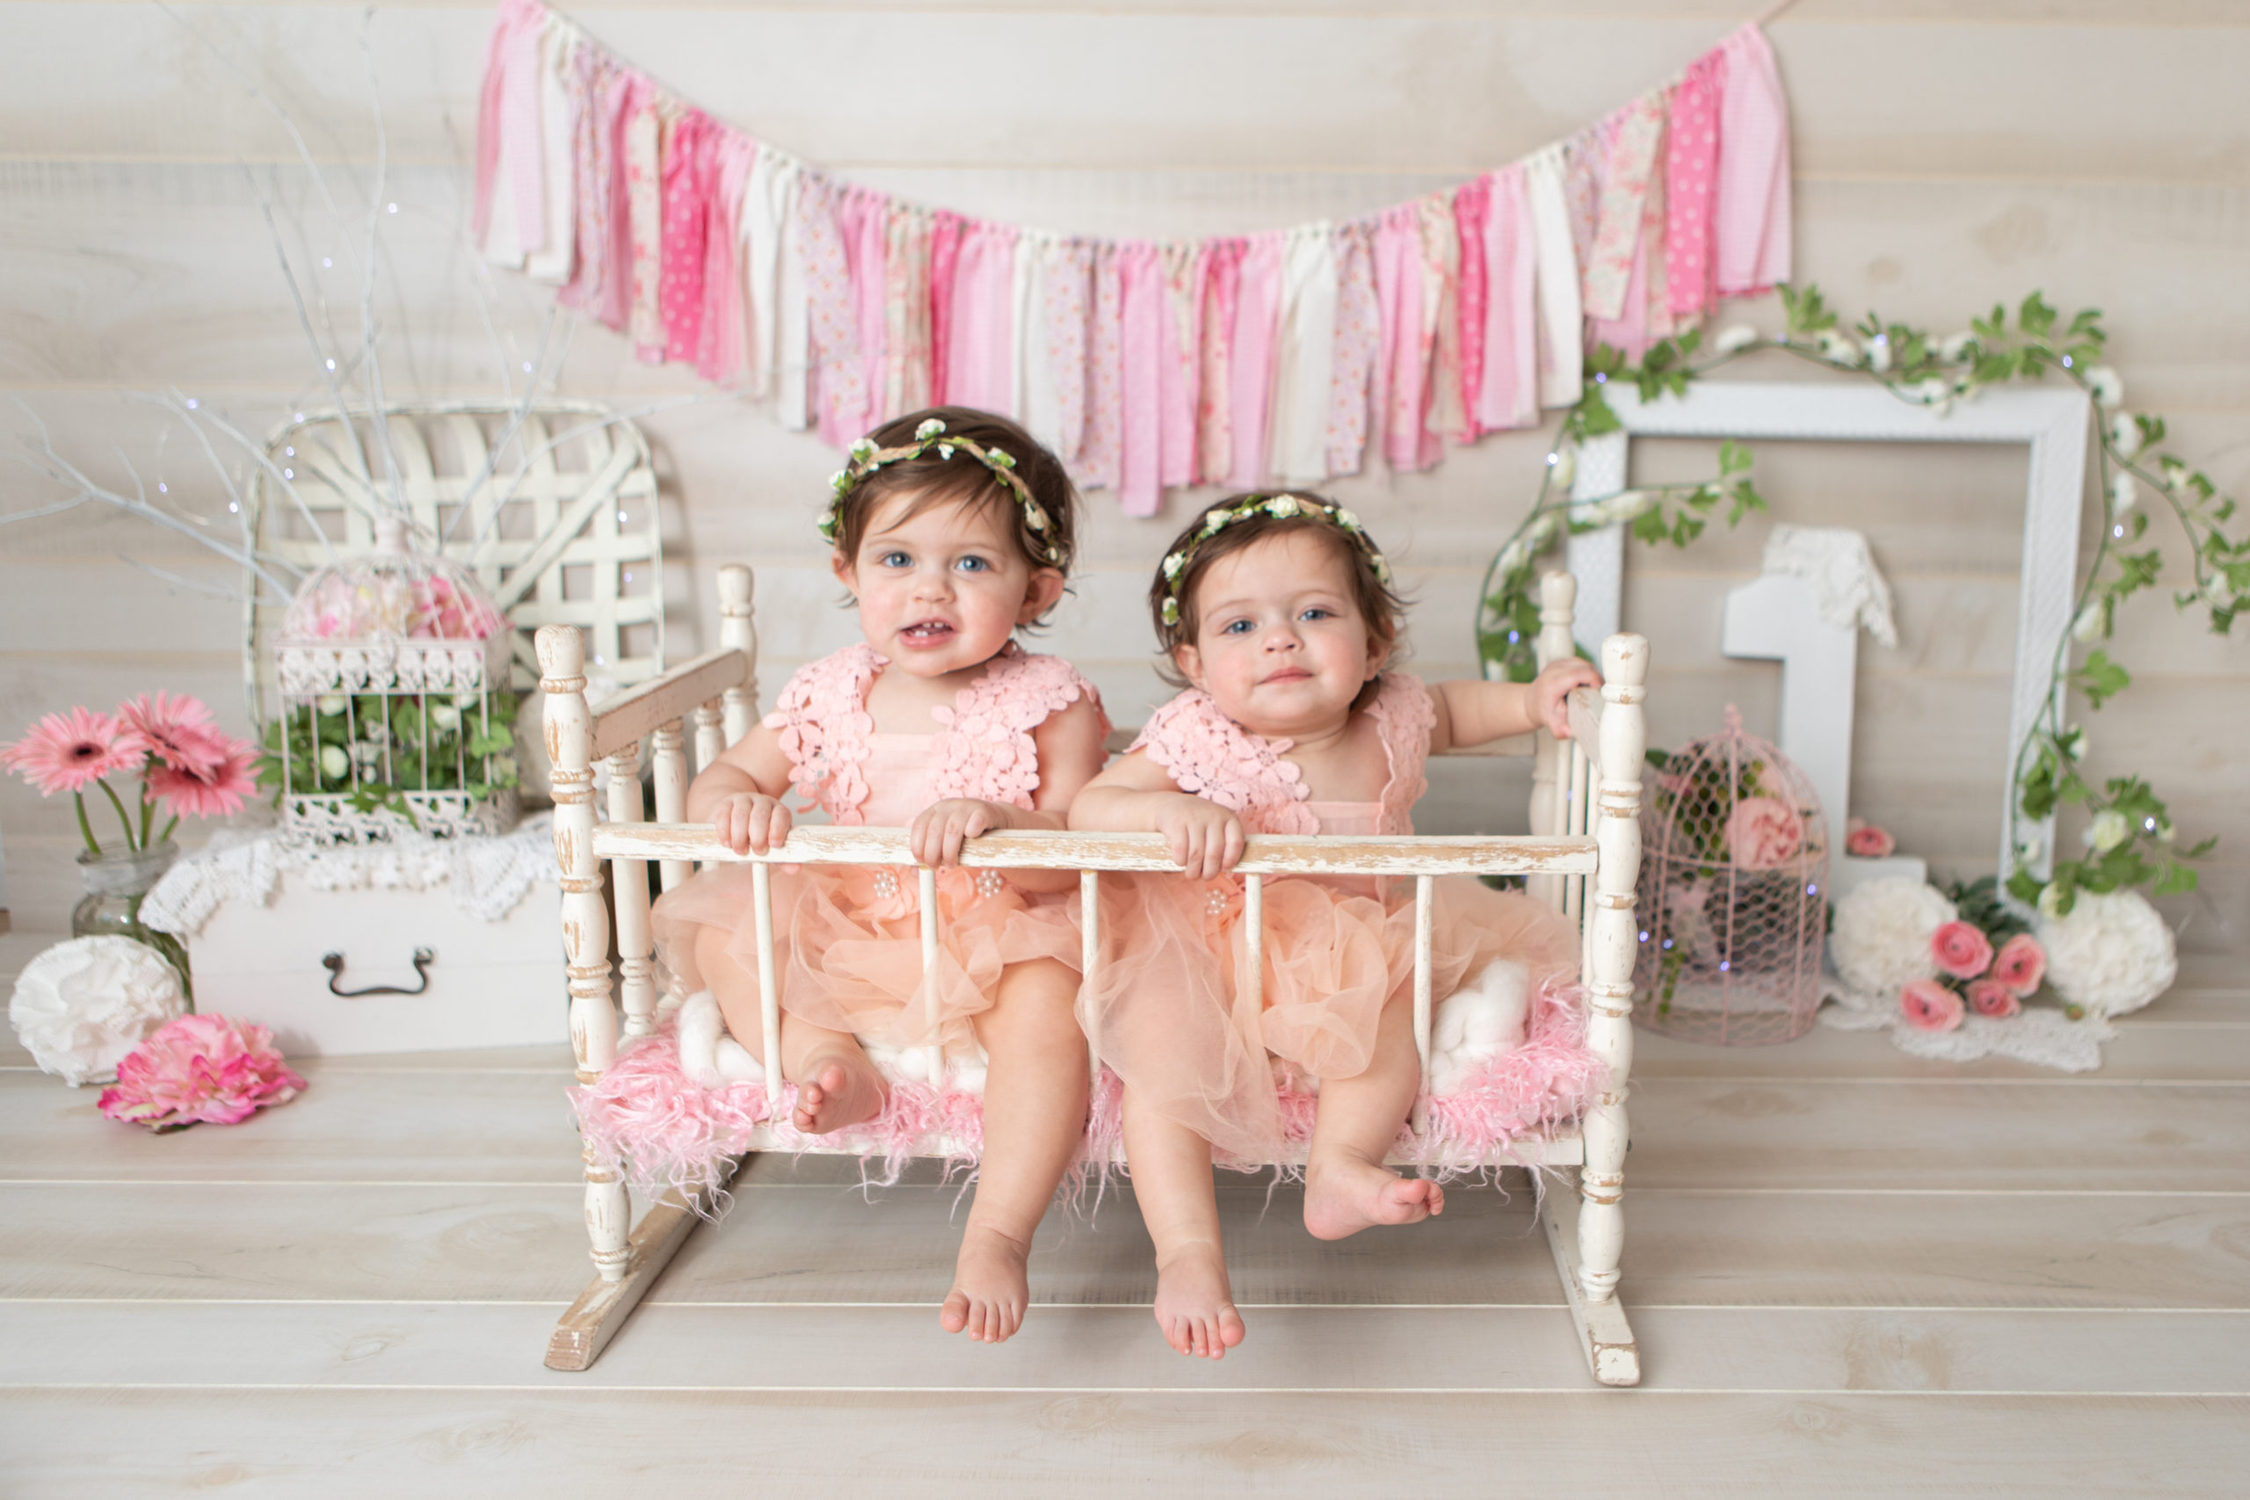 one-year-baby-cake-smash-bath-birthday-twin-girl-2-coastal-maine-twin-crib-pink-pretty